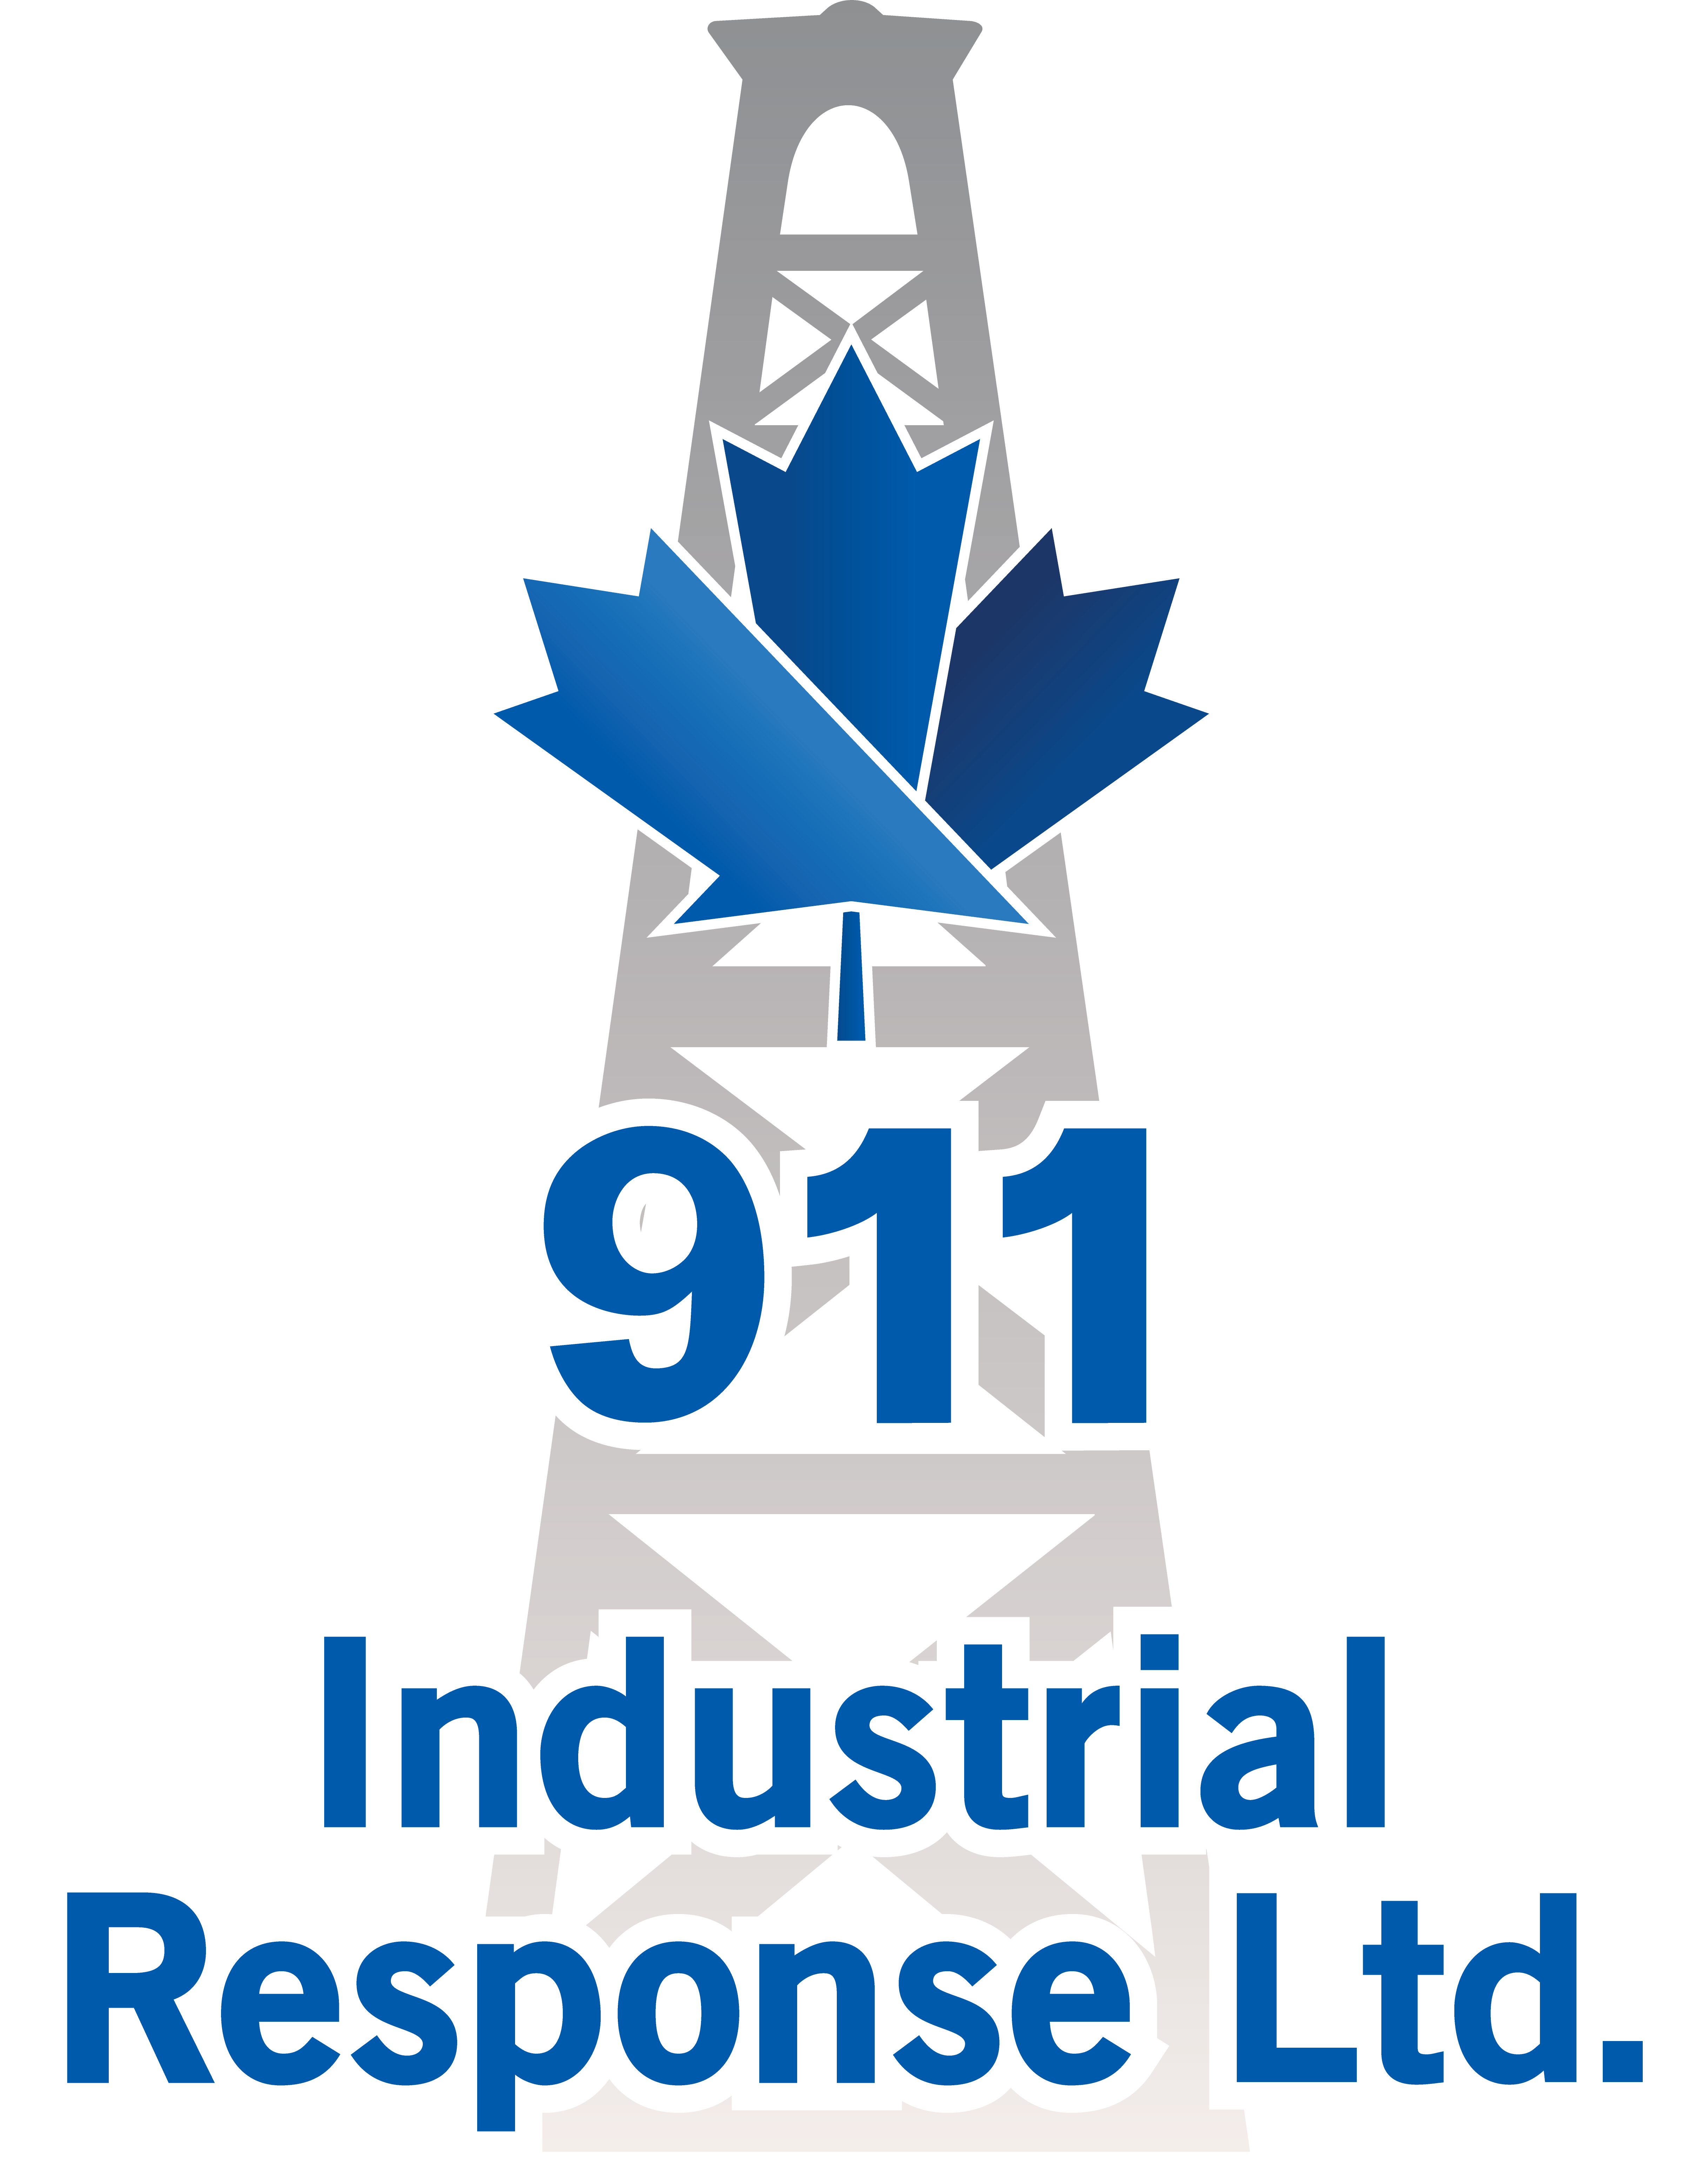 911 Industrial Response Ltd.